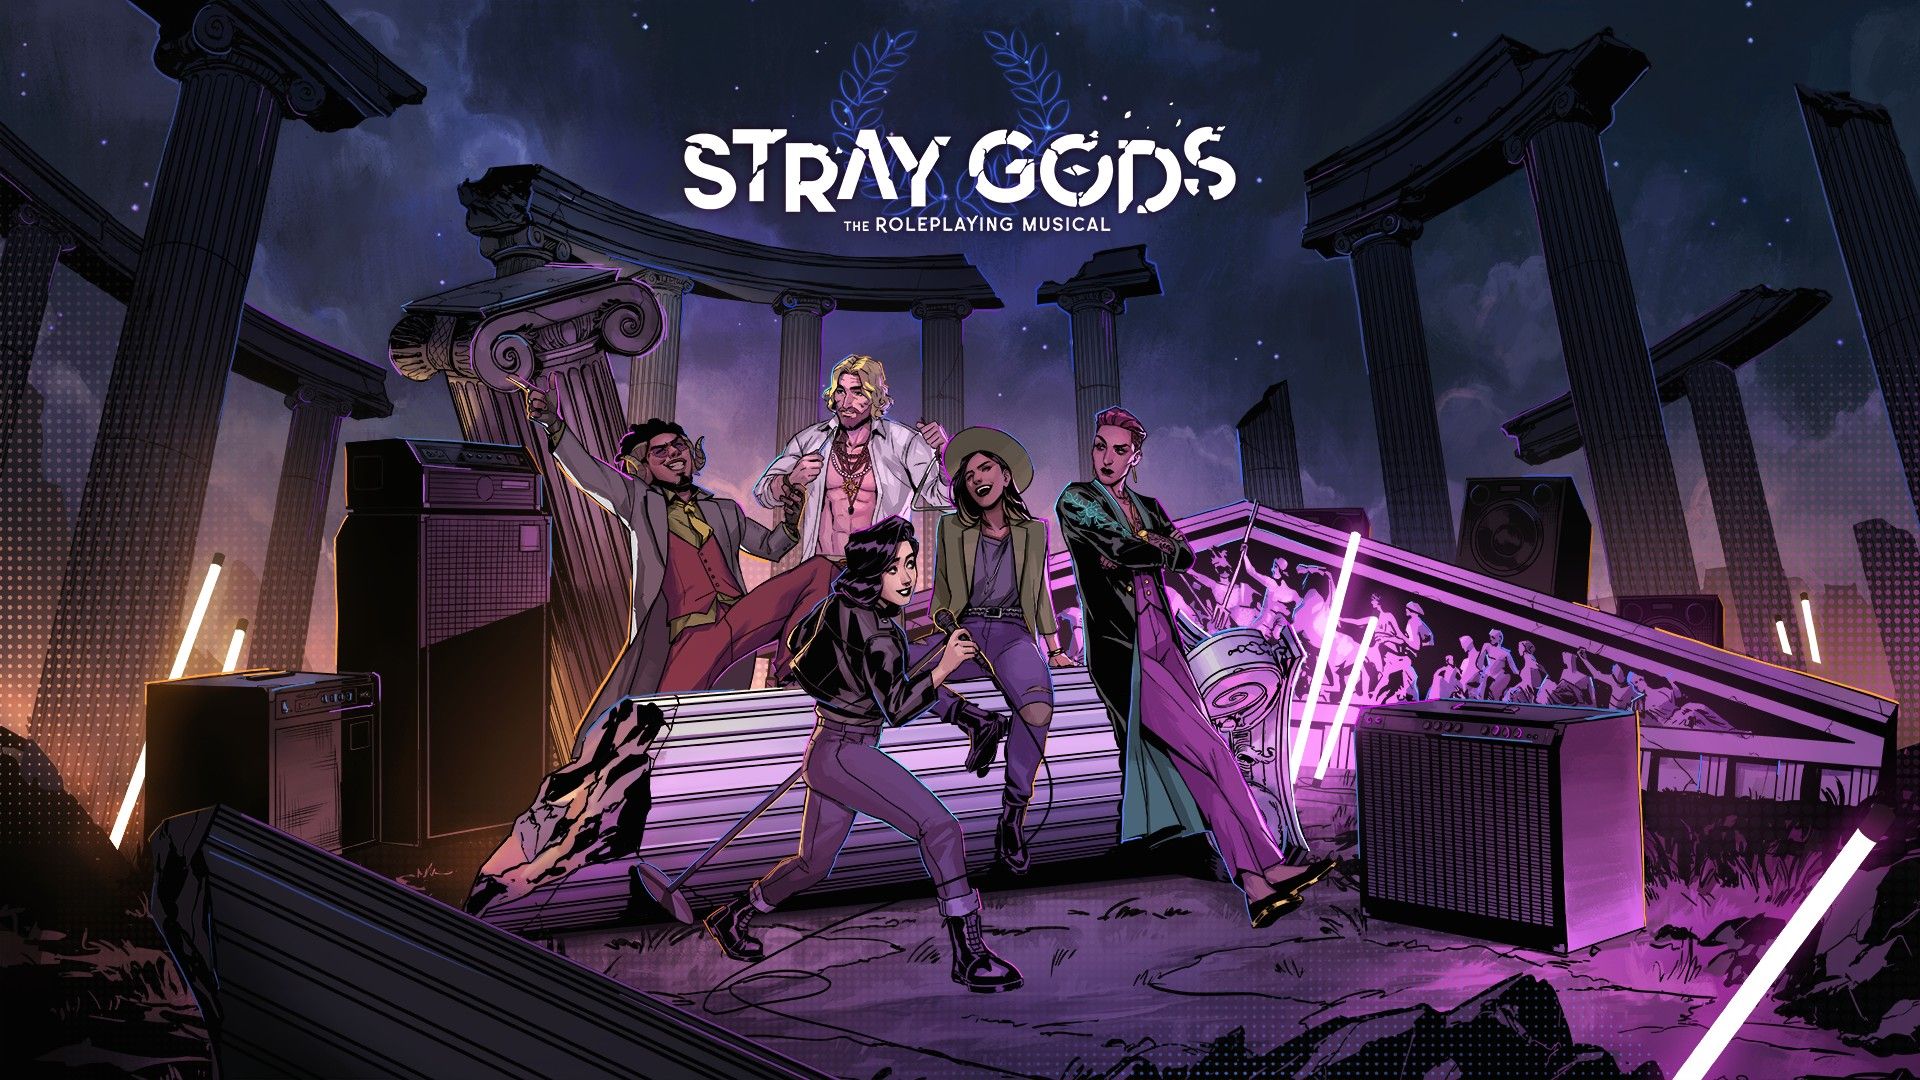 Stray Gods title art.